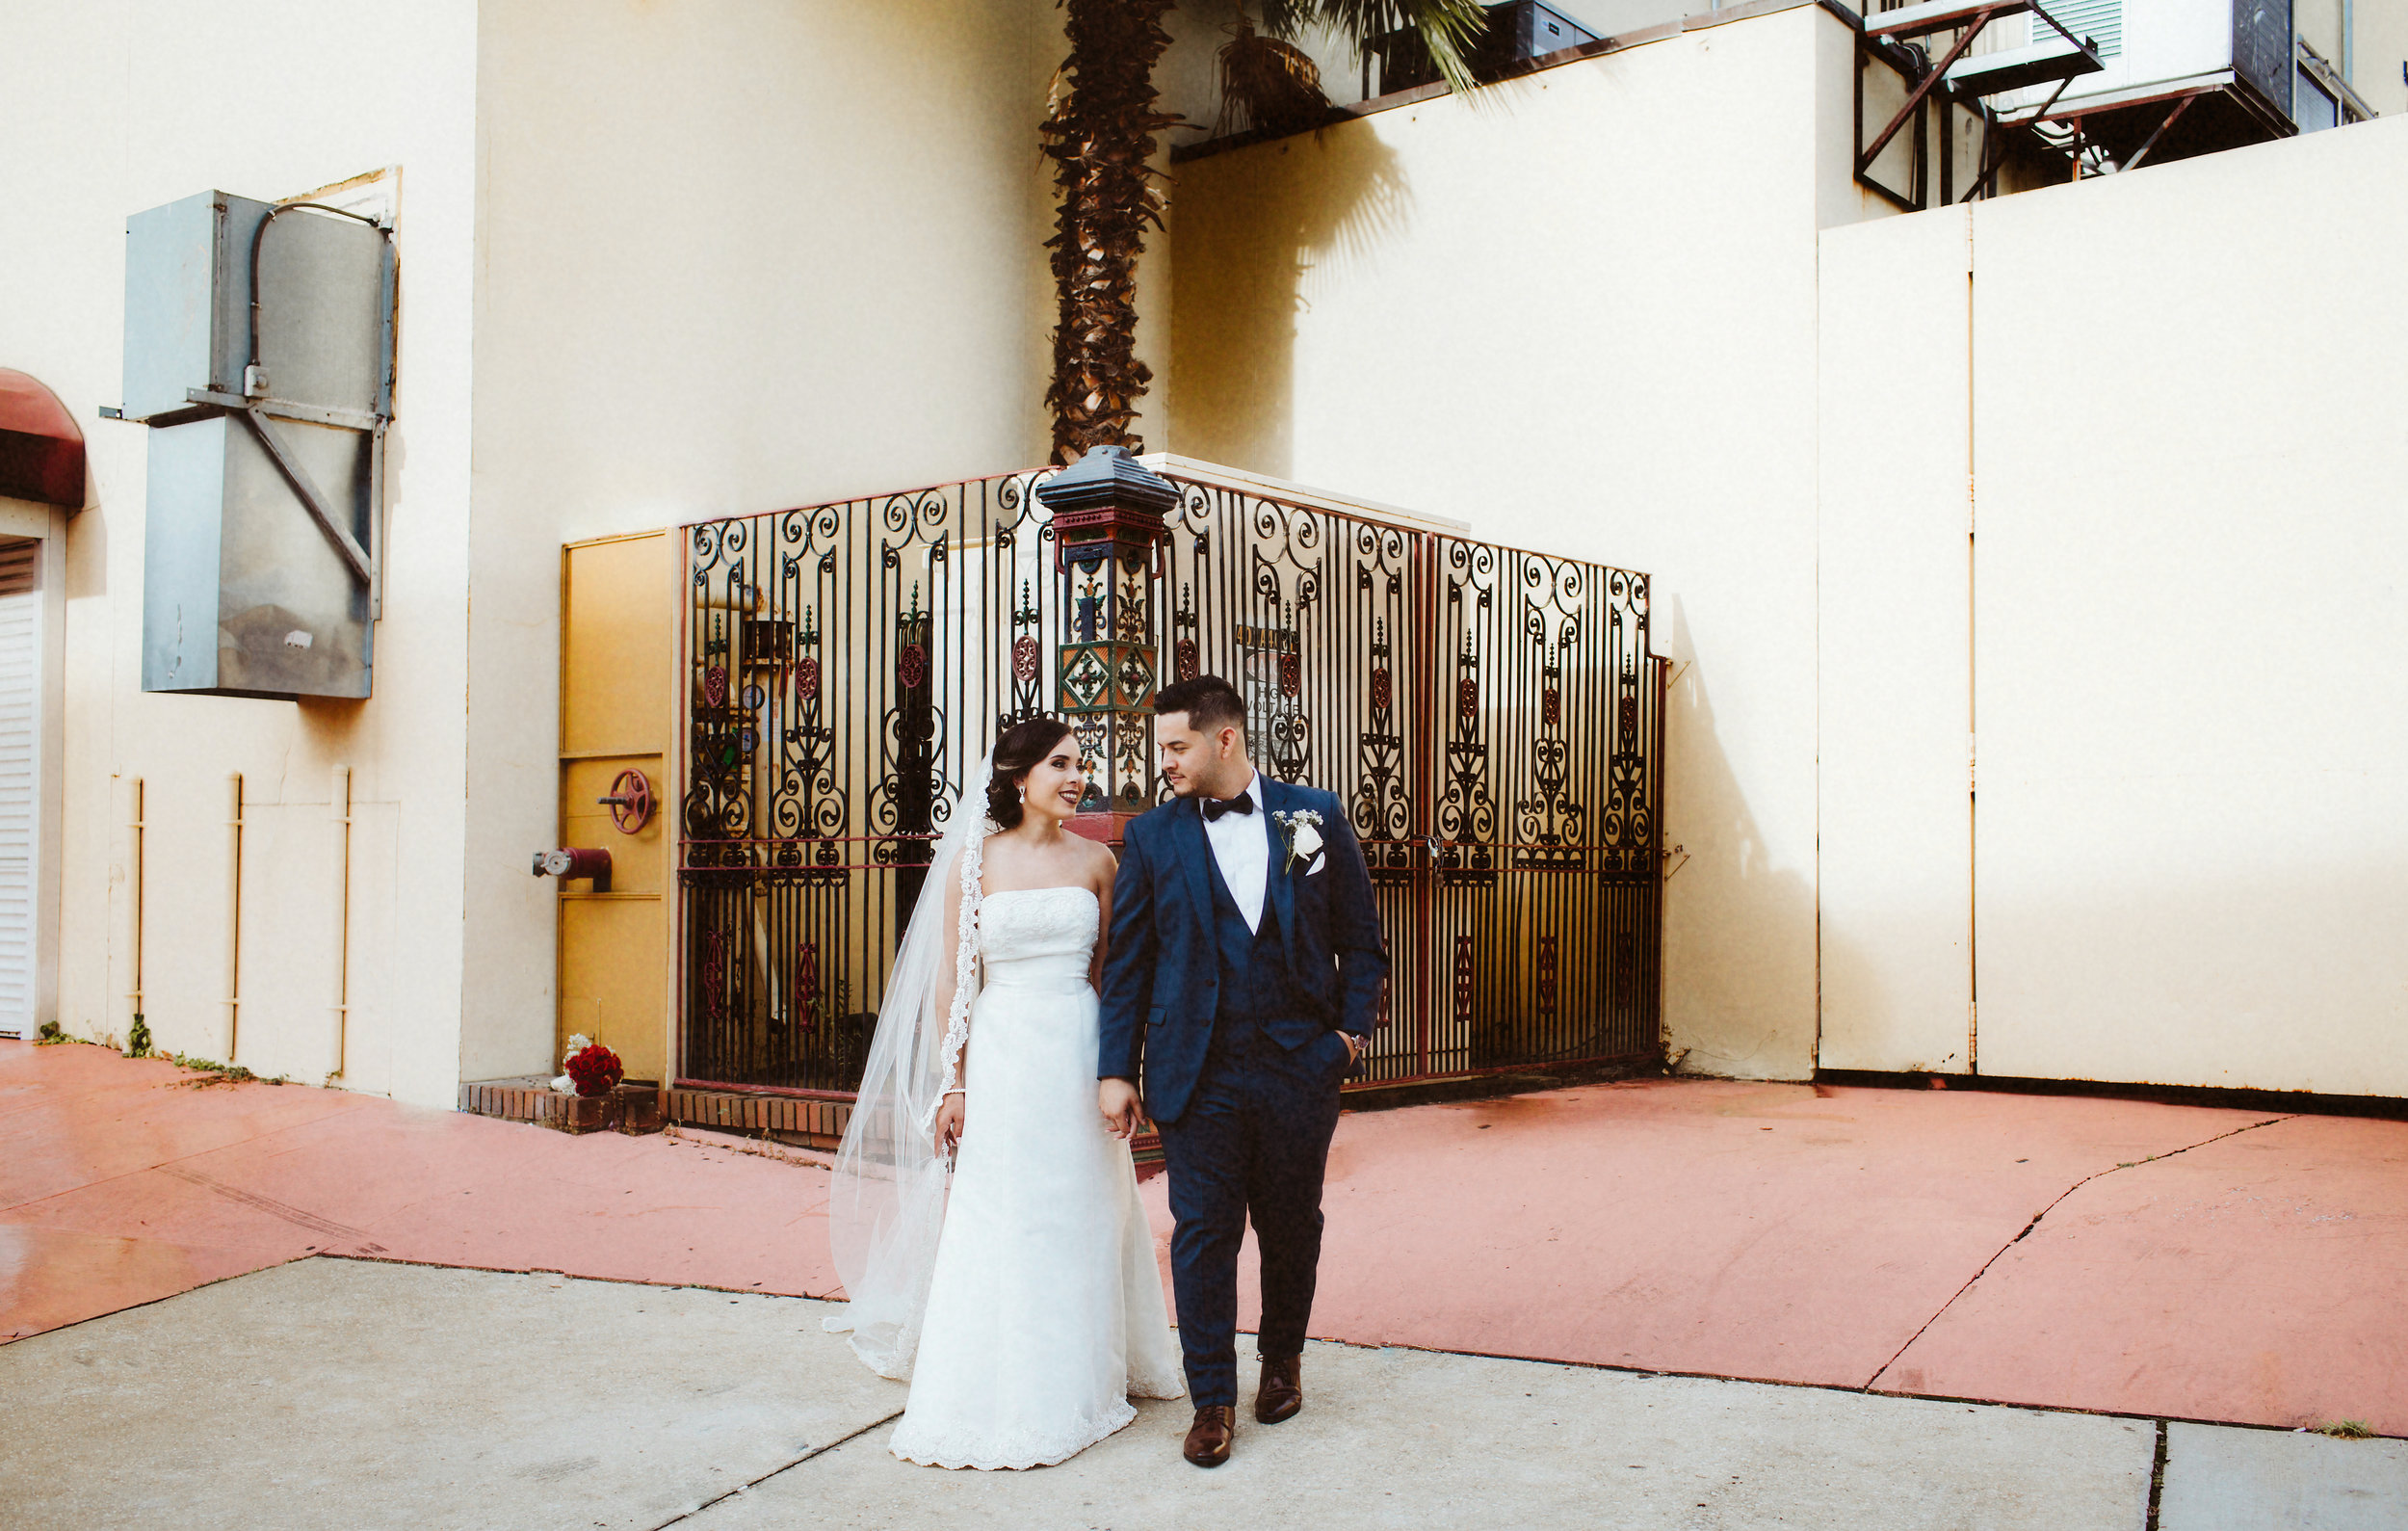 Ceviche Orlando | Wedding Photography | Vanessa Boy | vanessaboy.com |-278.com |final.jpg